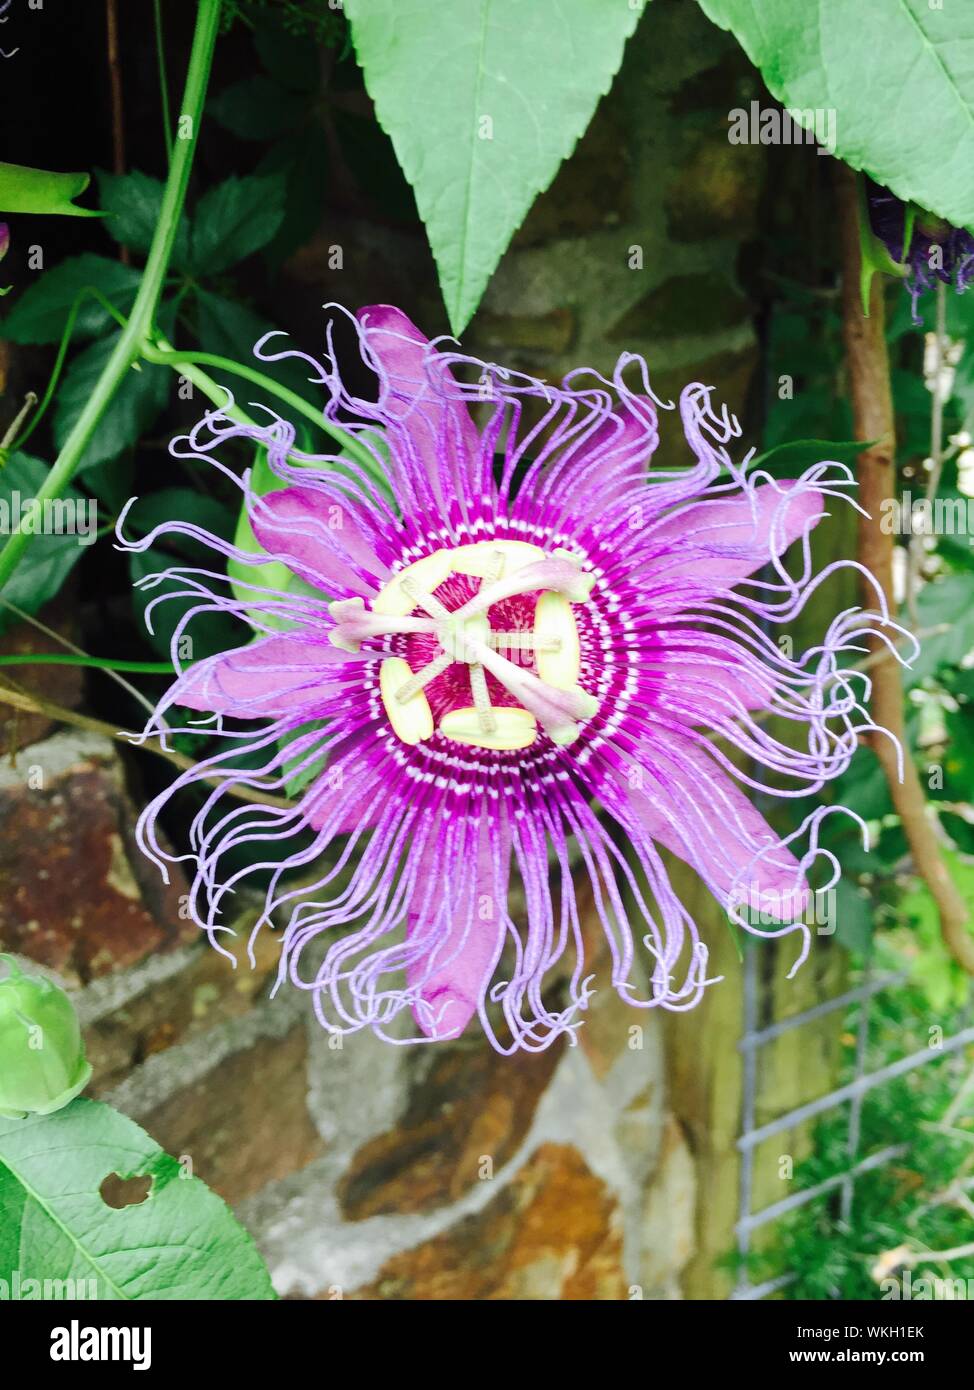 Flor morada exotica fotografías e imágenes de alta resolución - Alamy